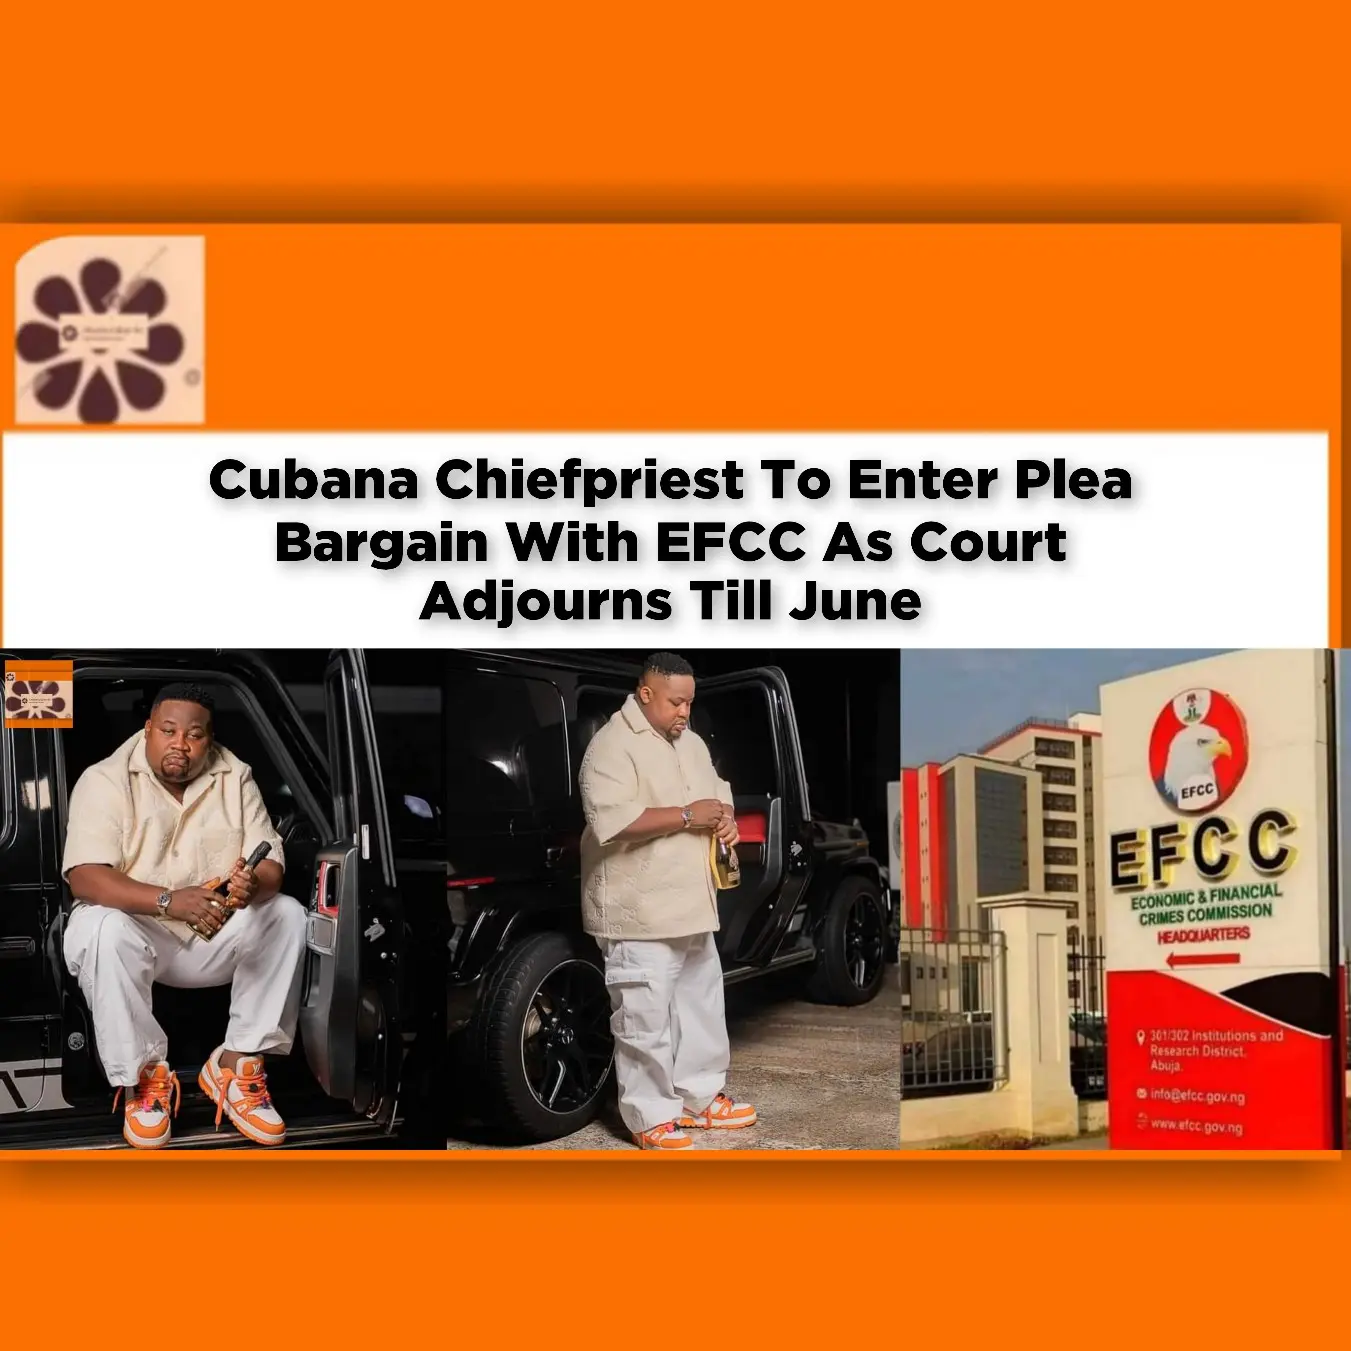 Cubana Chiefpriest To Enter Plea Bargain With EFCC As Court Adjourns Till June ~ OsazuwaAkonedo #Forces